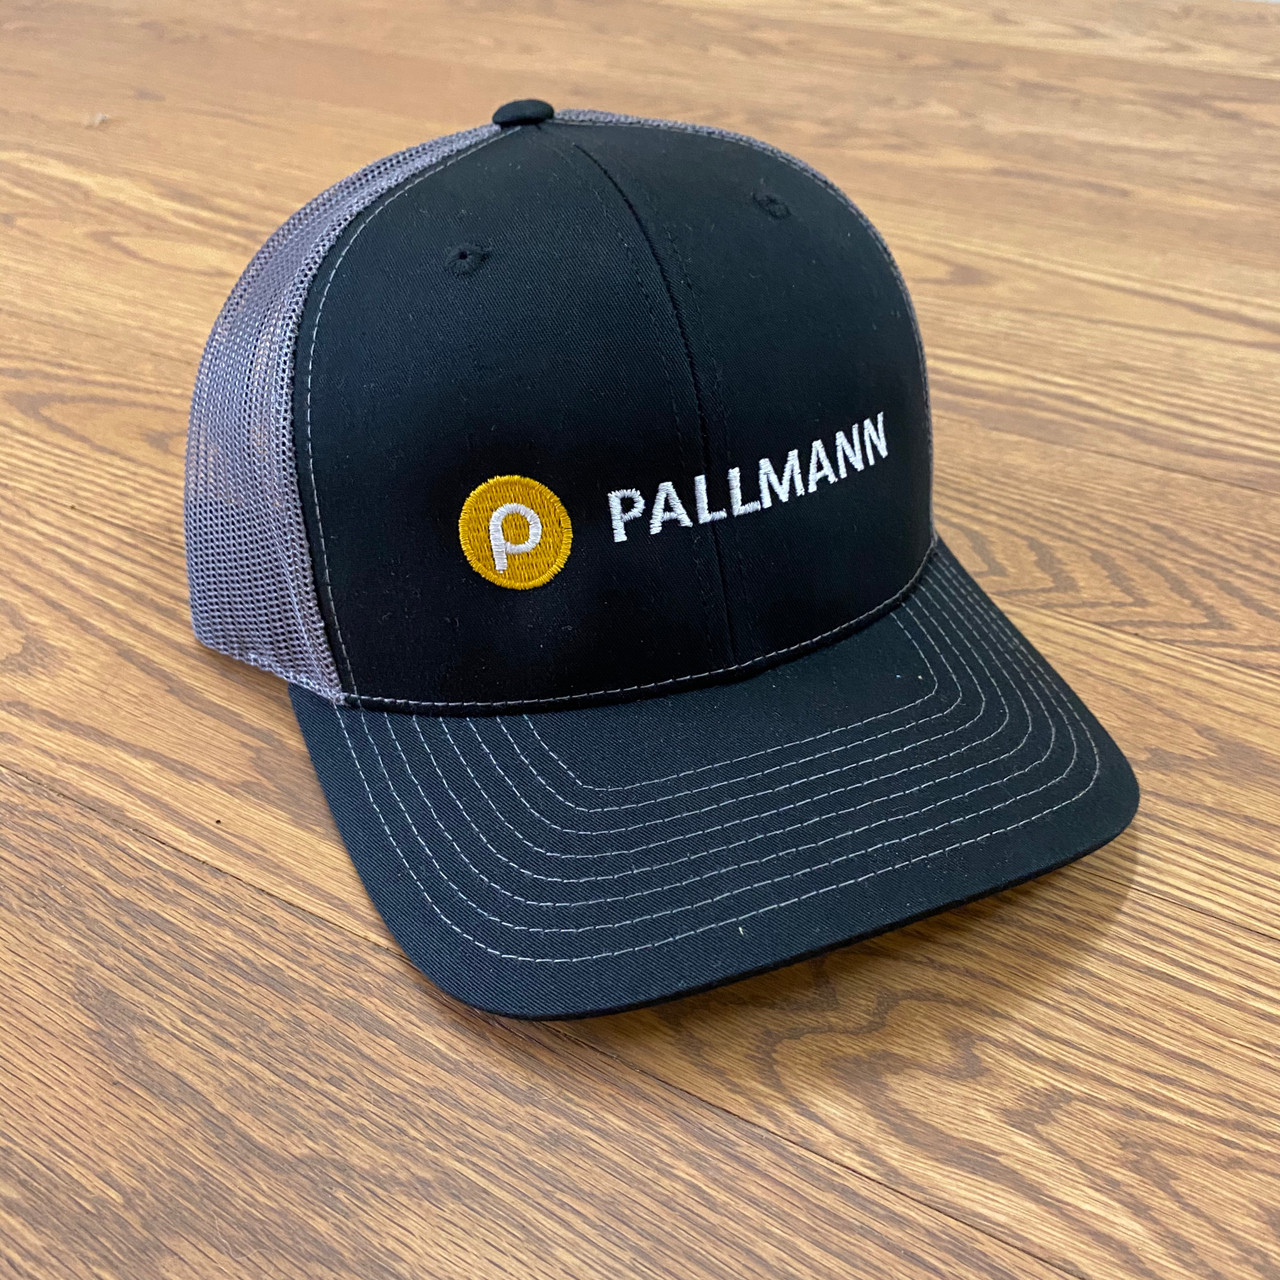 Pallman Grey Mesh Hat